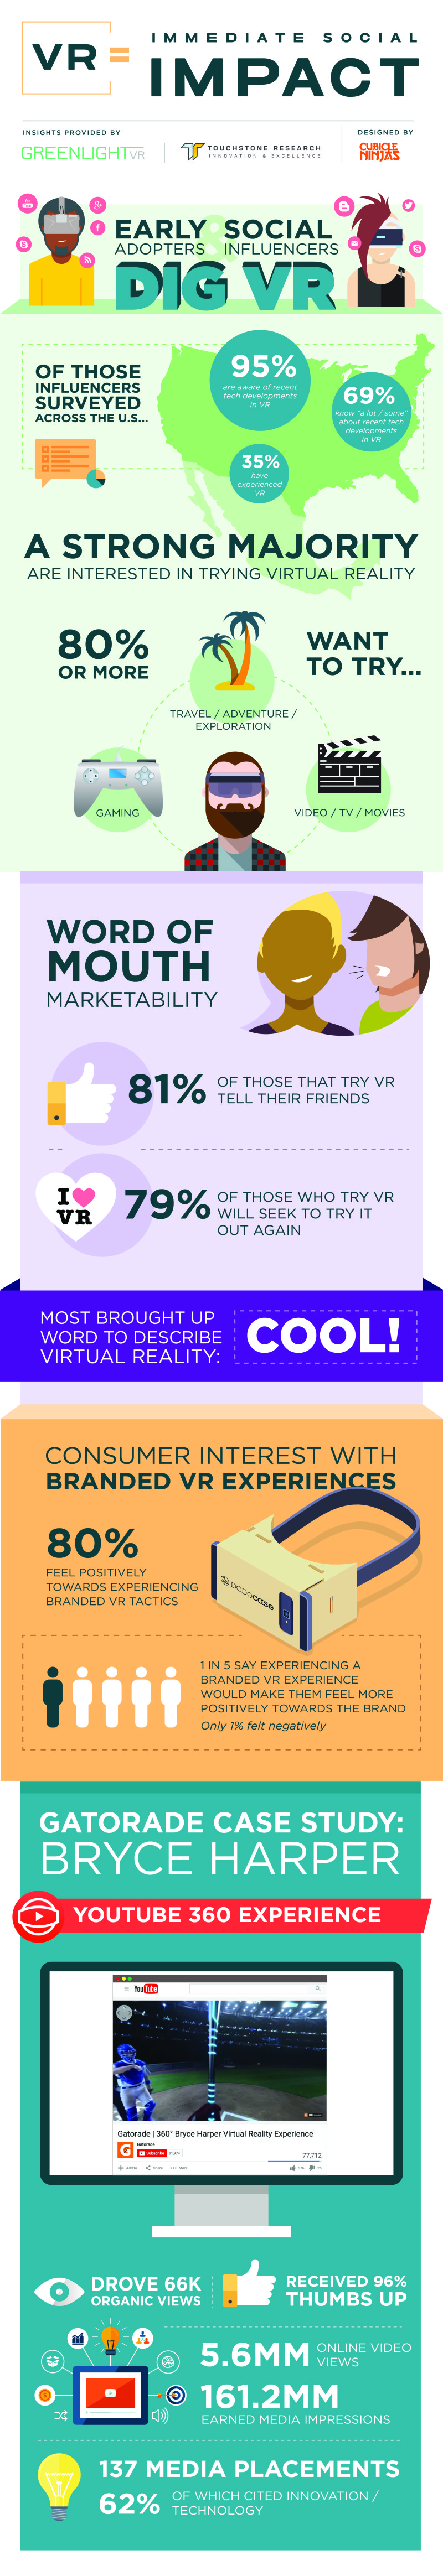 VR Consumer Sentiment Infographic